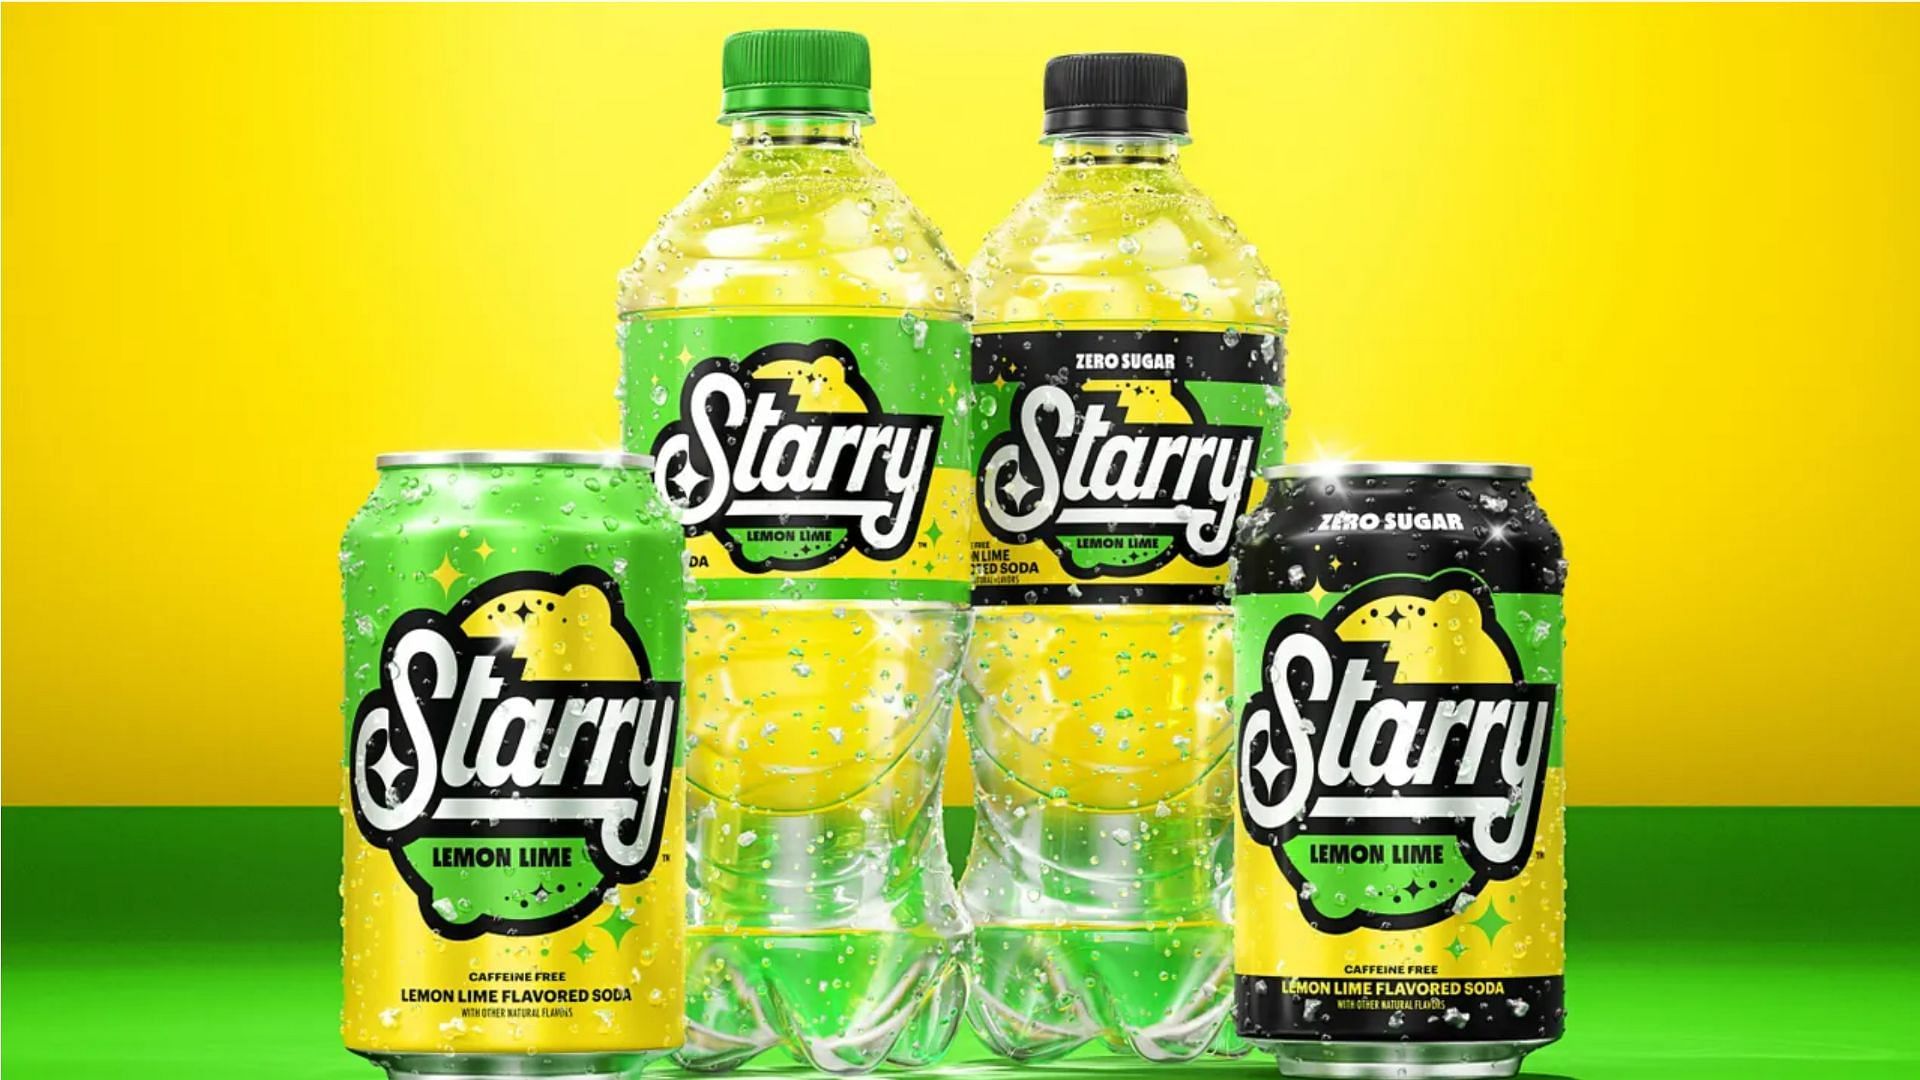 PepsiCo introduces the new Starry lemon soda to the market (Image via PepsiCo)